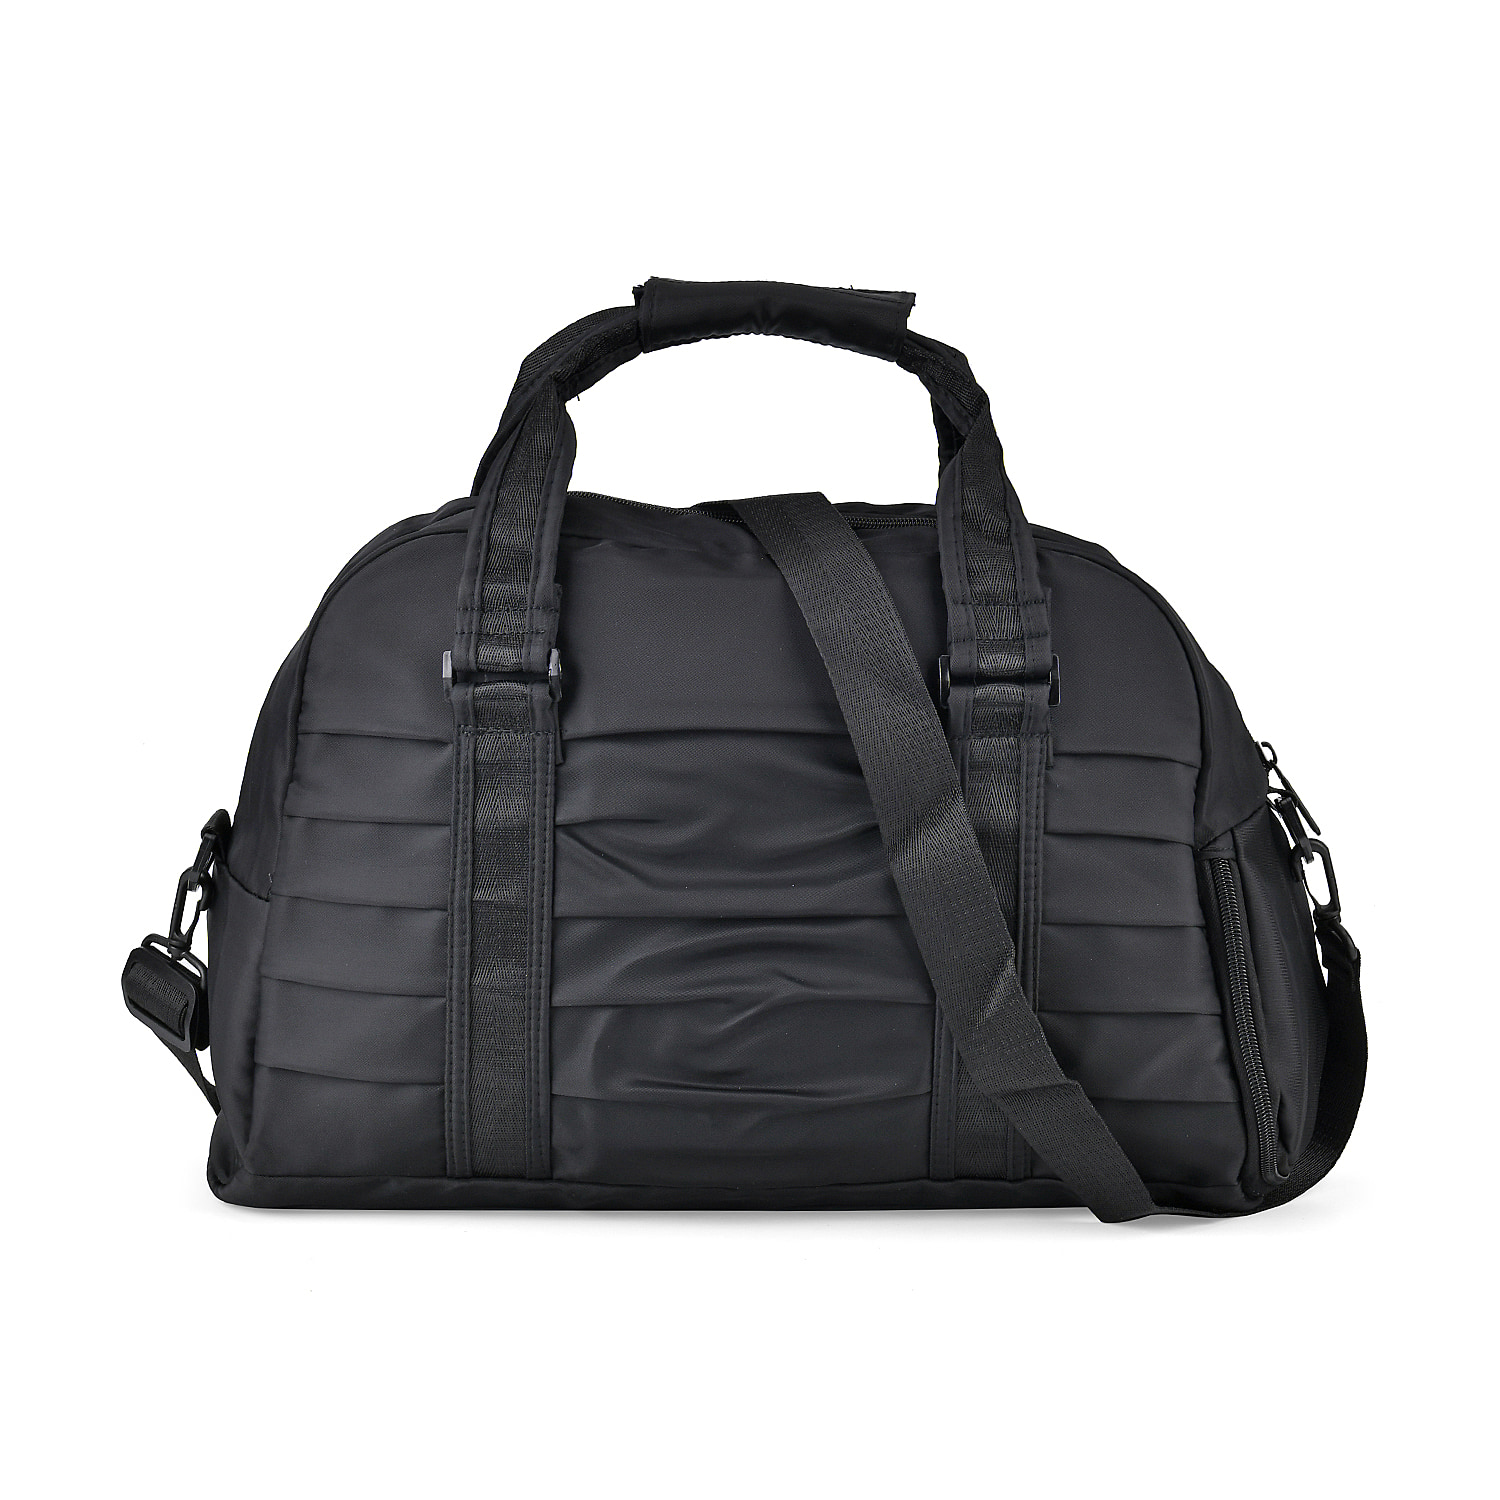 Polyester-Patterned-Travel-Bag-Size-41x16x27-cm-Black-Pink